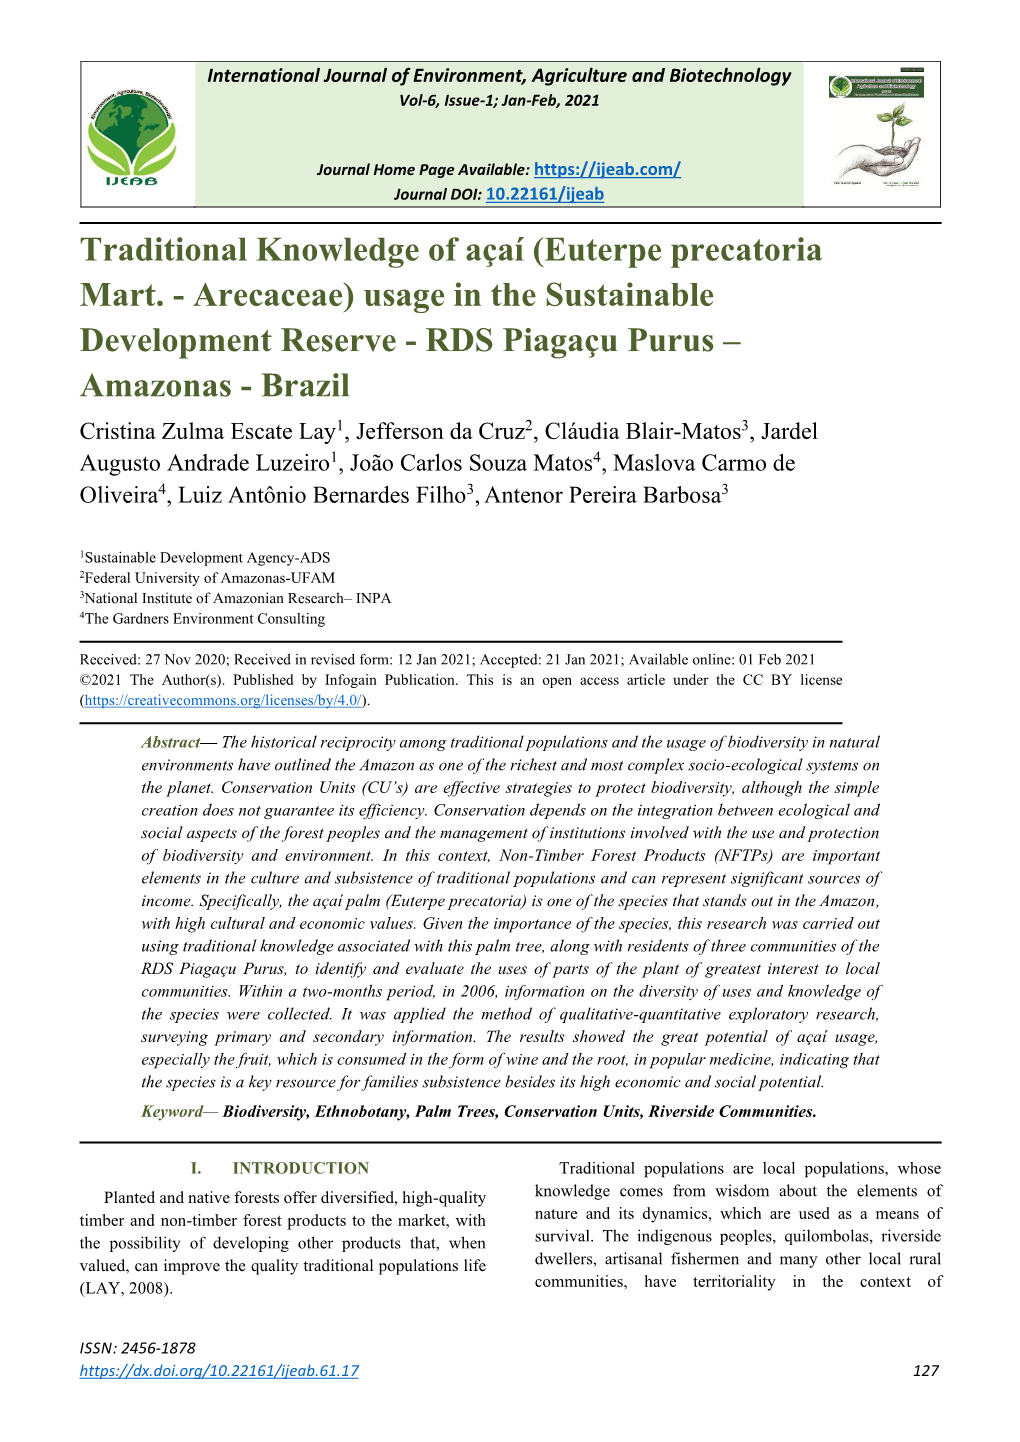 Traditional Knowledge of Açaí (Euterpe Precatoria Mart